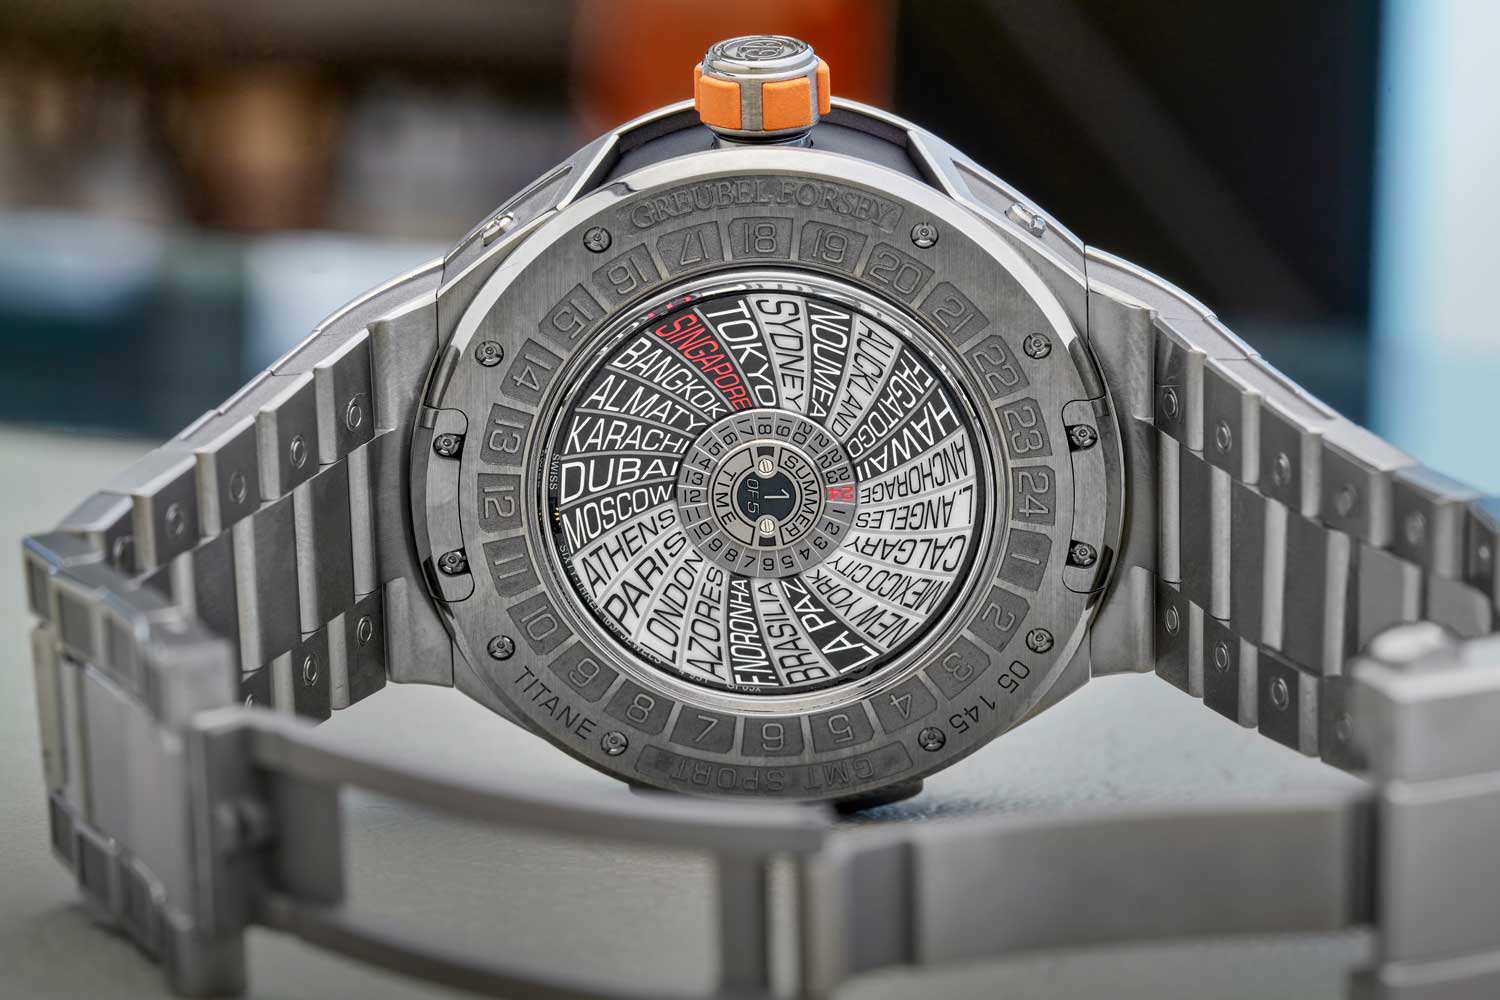 Grebel Forsey GMT Sport “Sincere Fine Watches Edition” (© Revolution)